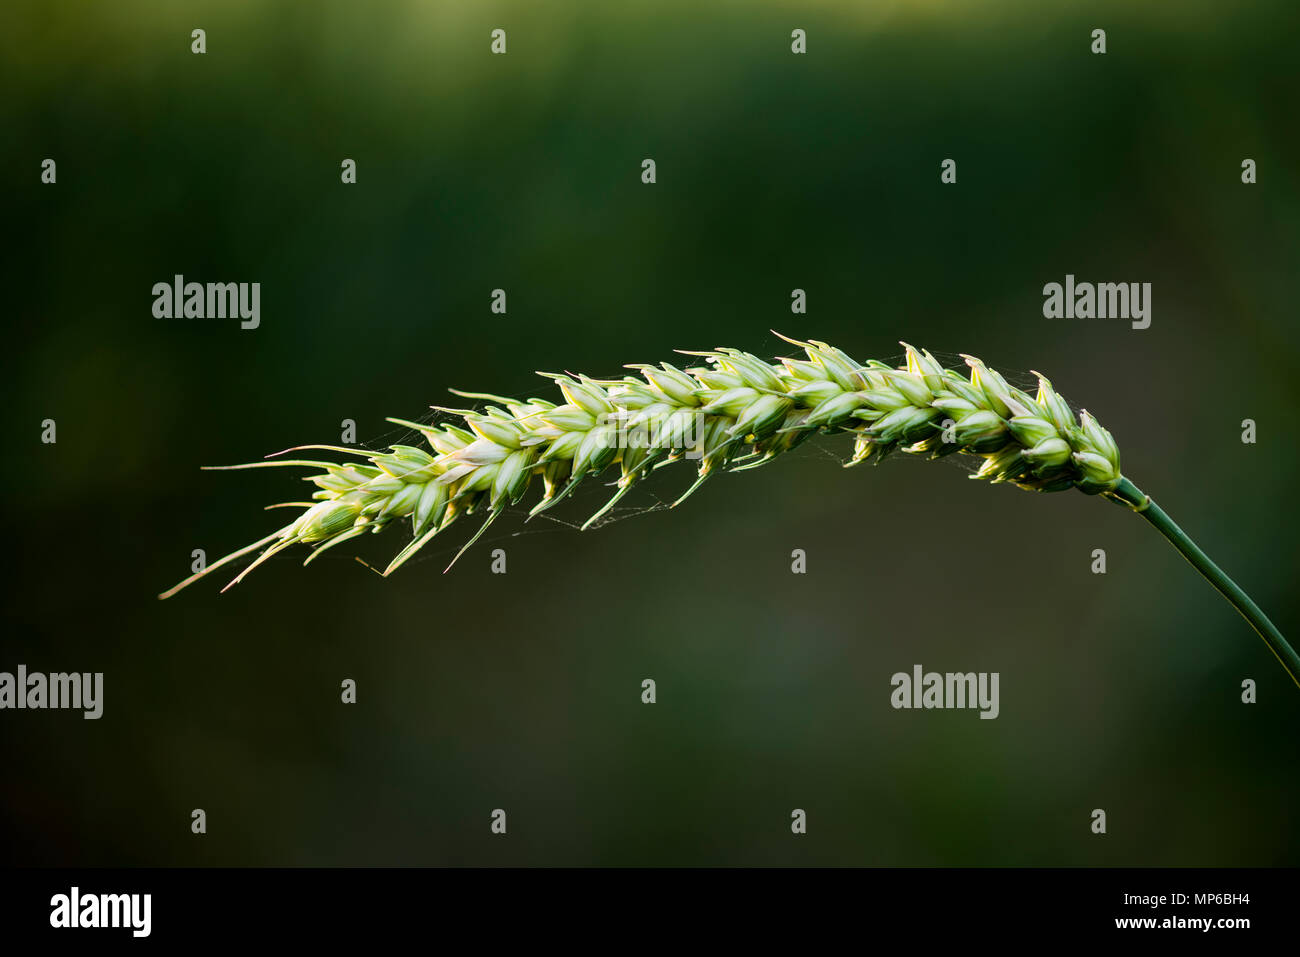 An ear of wheat growing in a field. Stock Photo